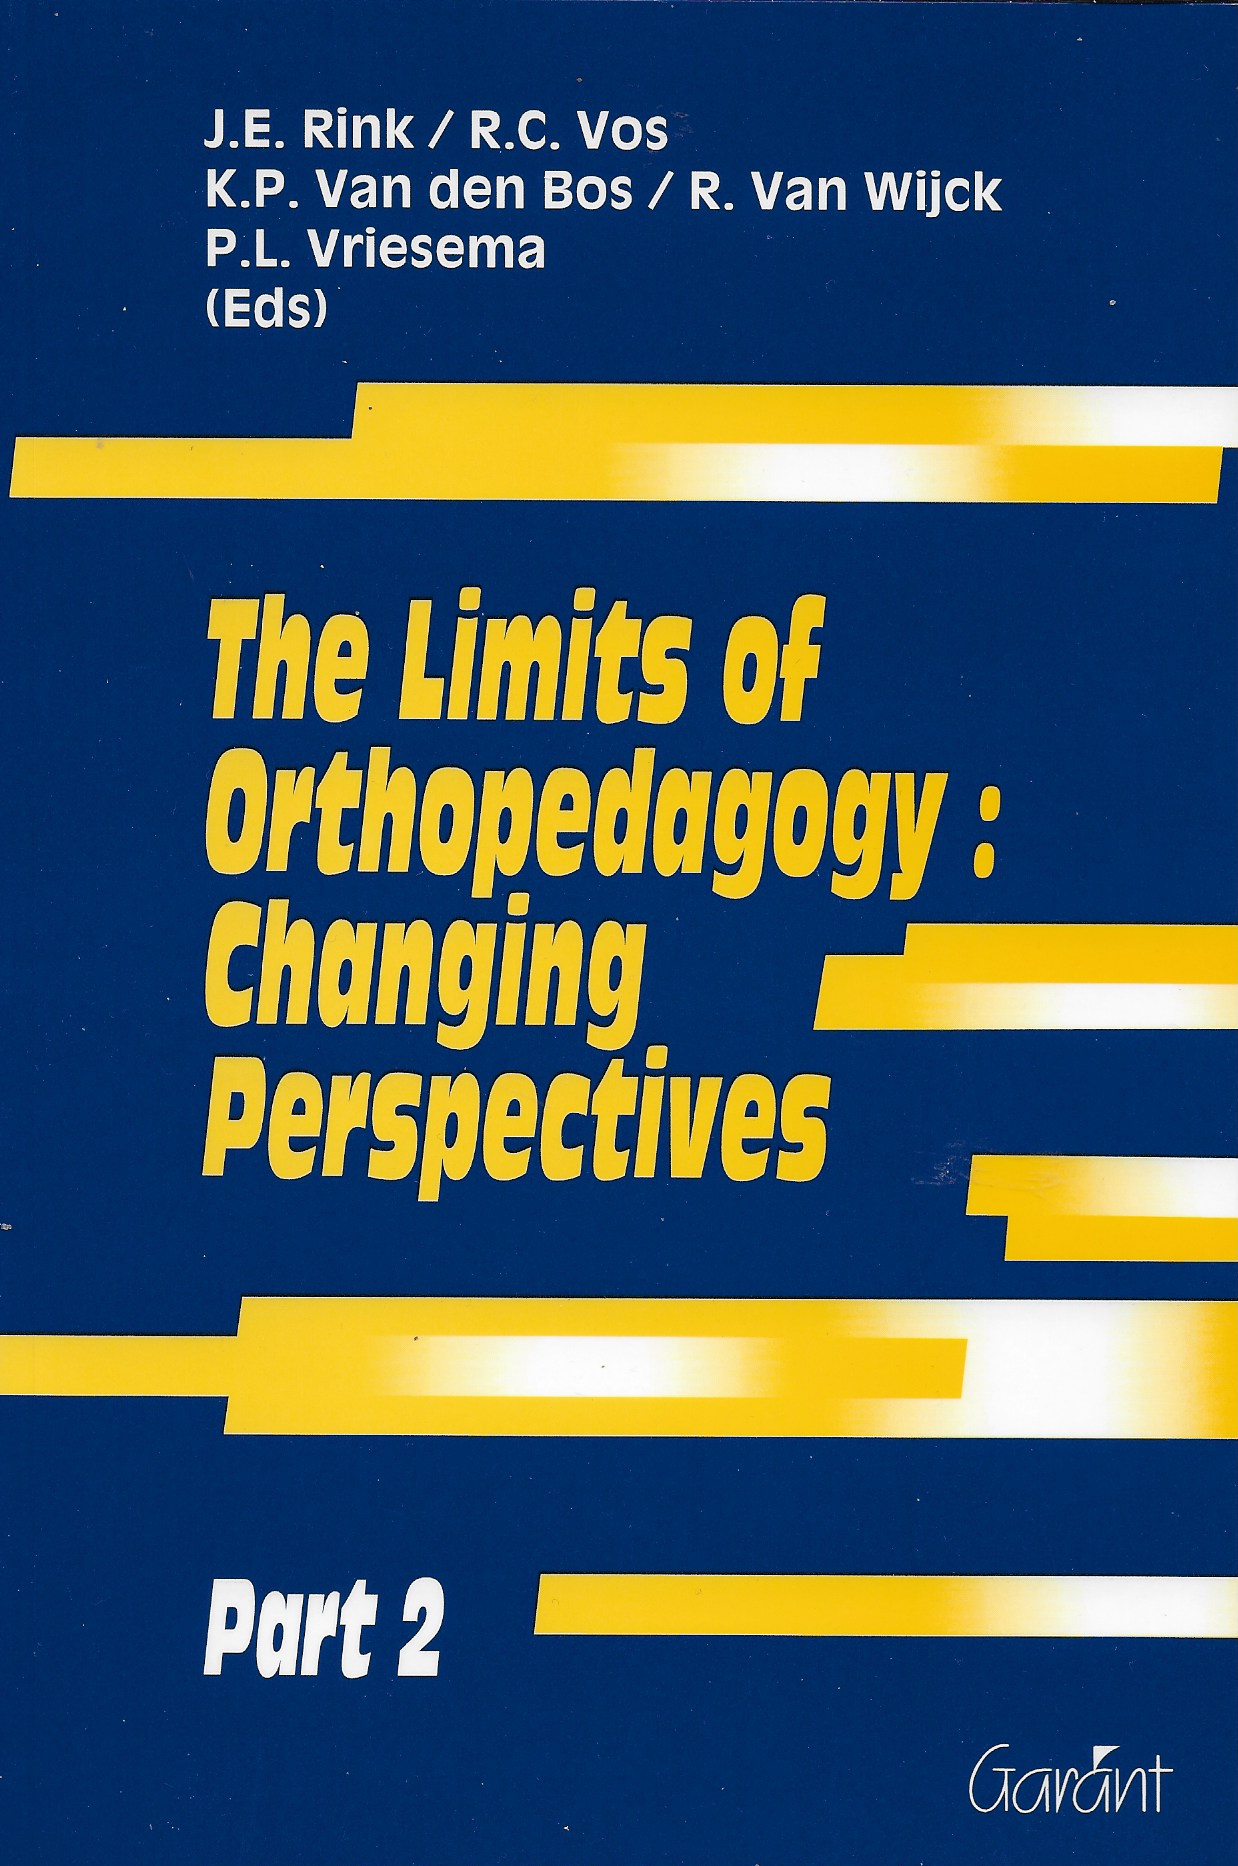 25 jaar Orthopedagogiek